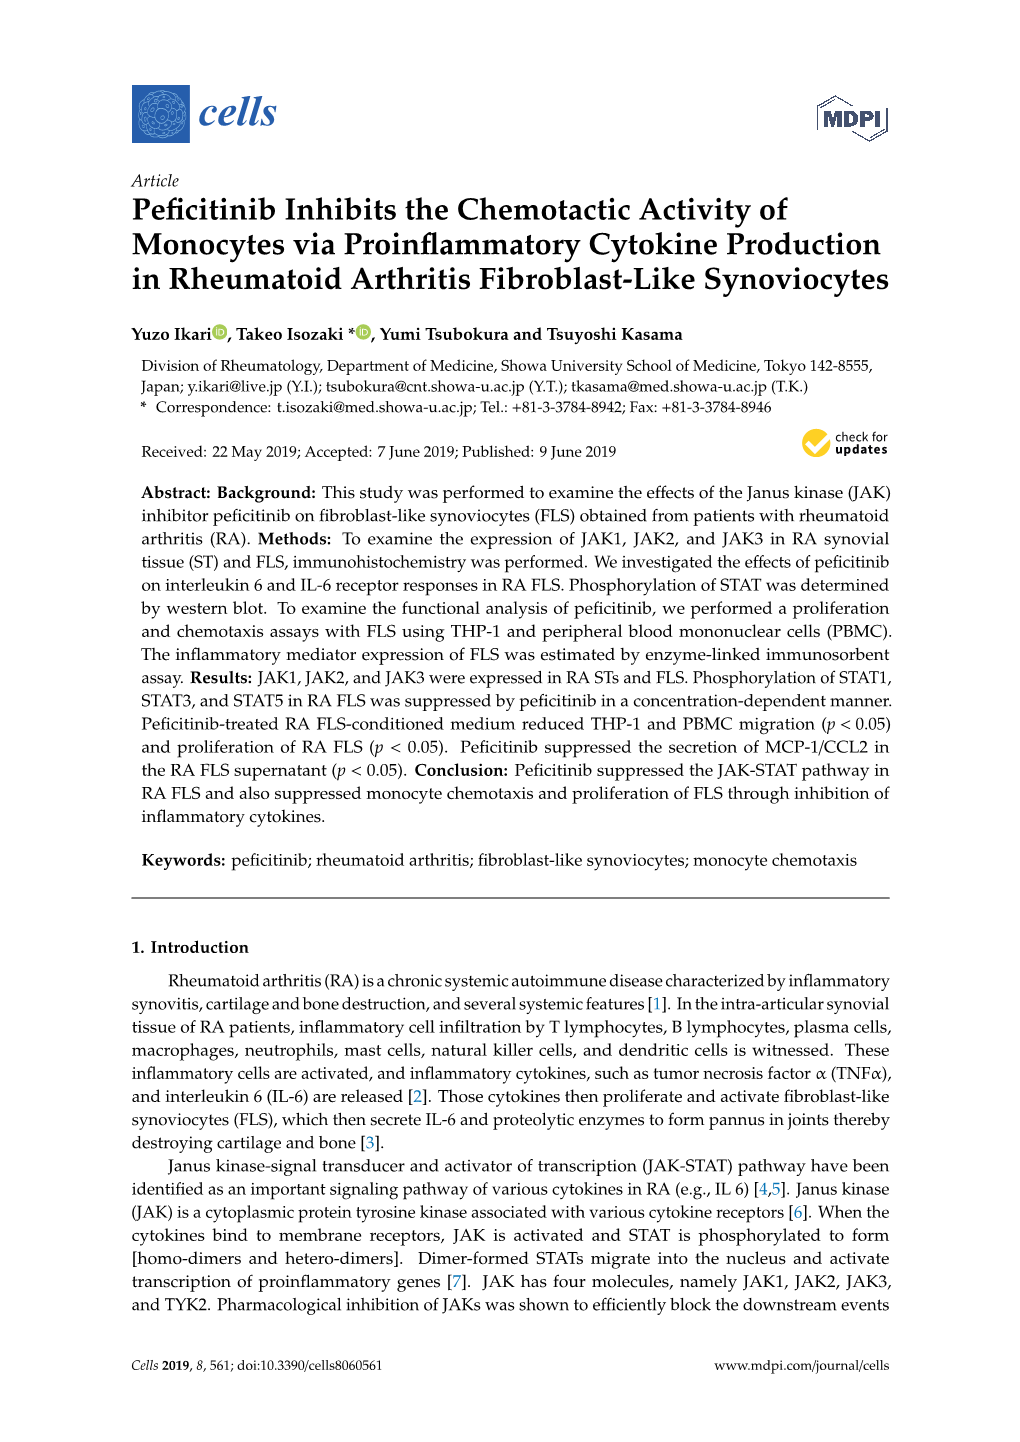 Peficitinib Inhibits the Chemotactic Activity of Monocytes Via